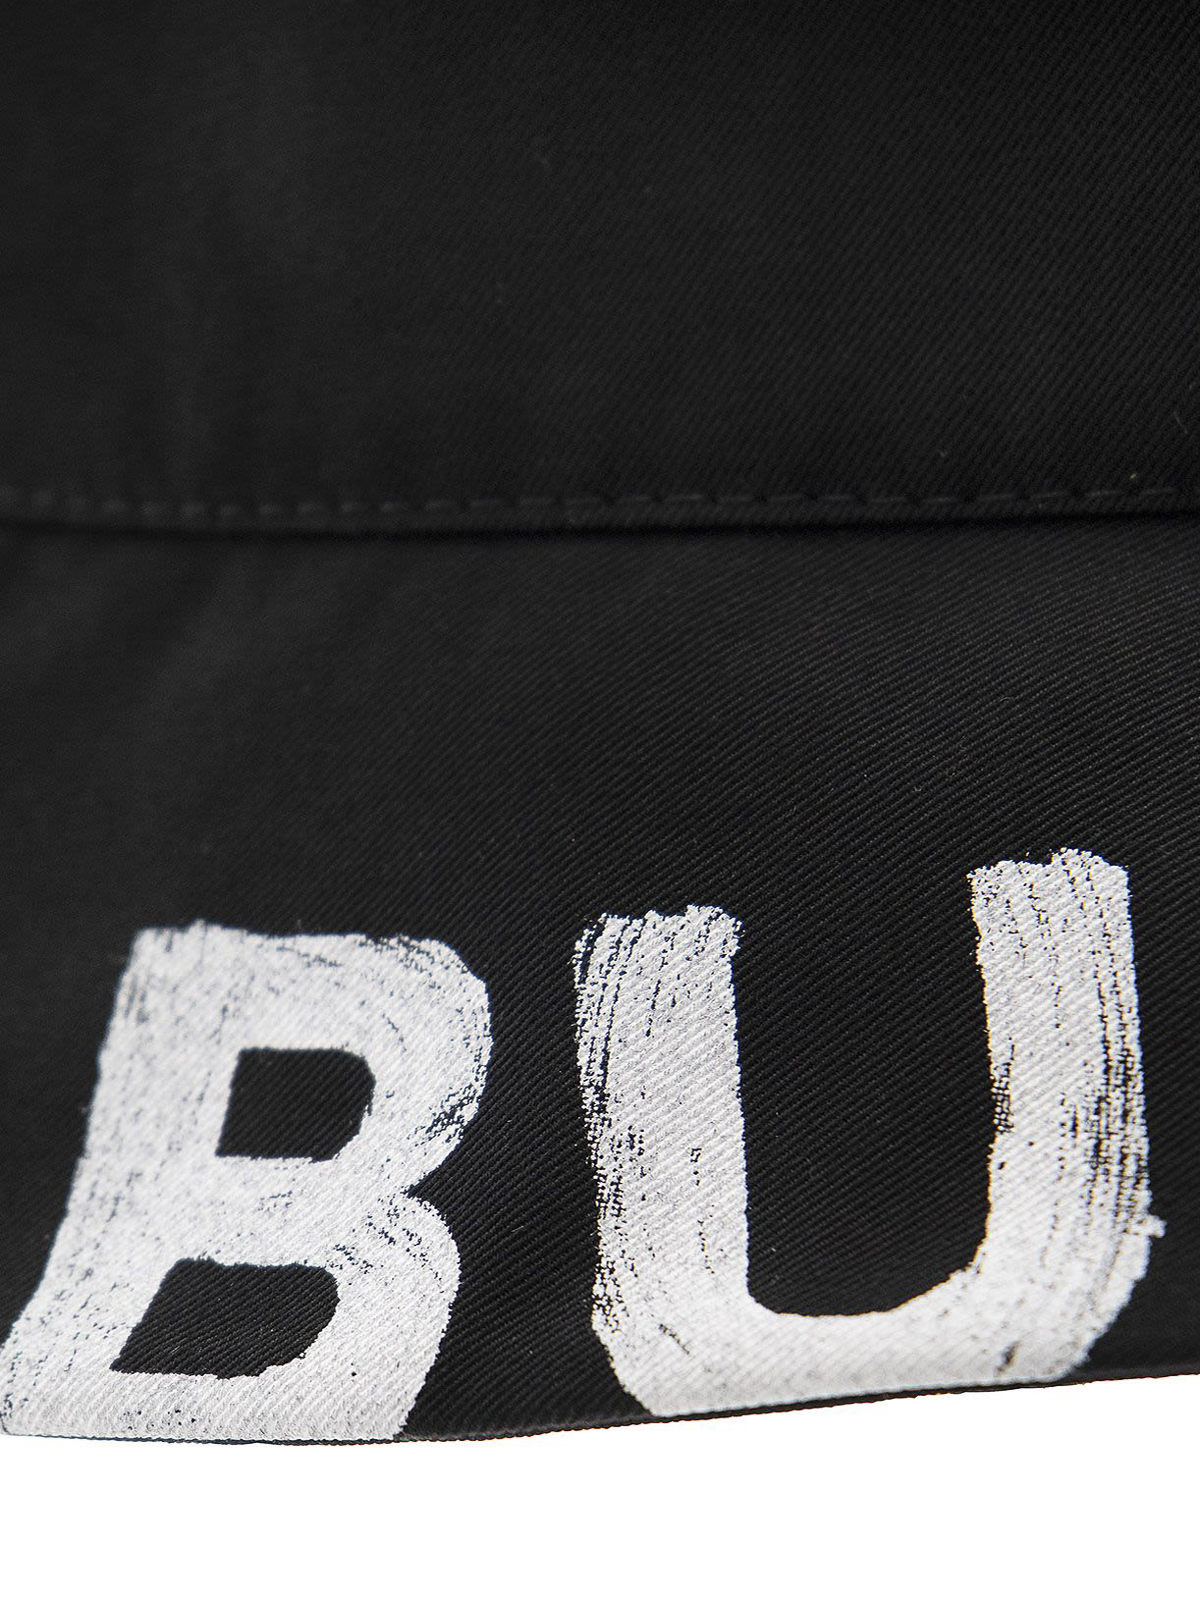 Burberry Reversible Logo Print Cotton Gabardine Bucket Hat Black